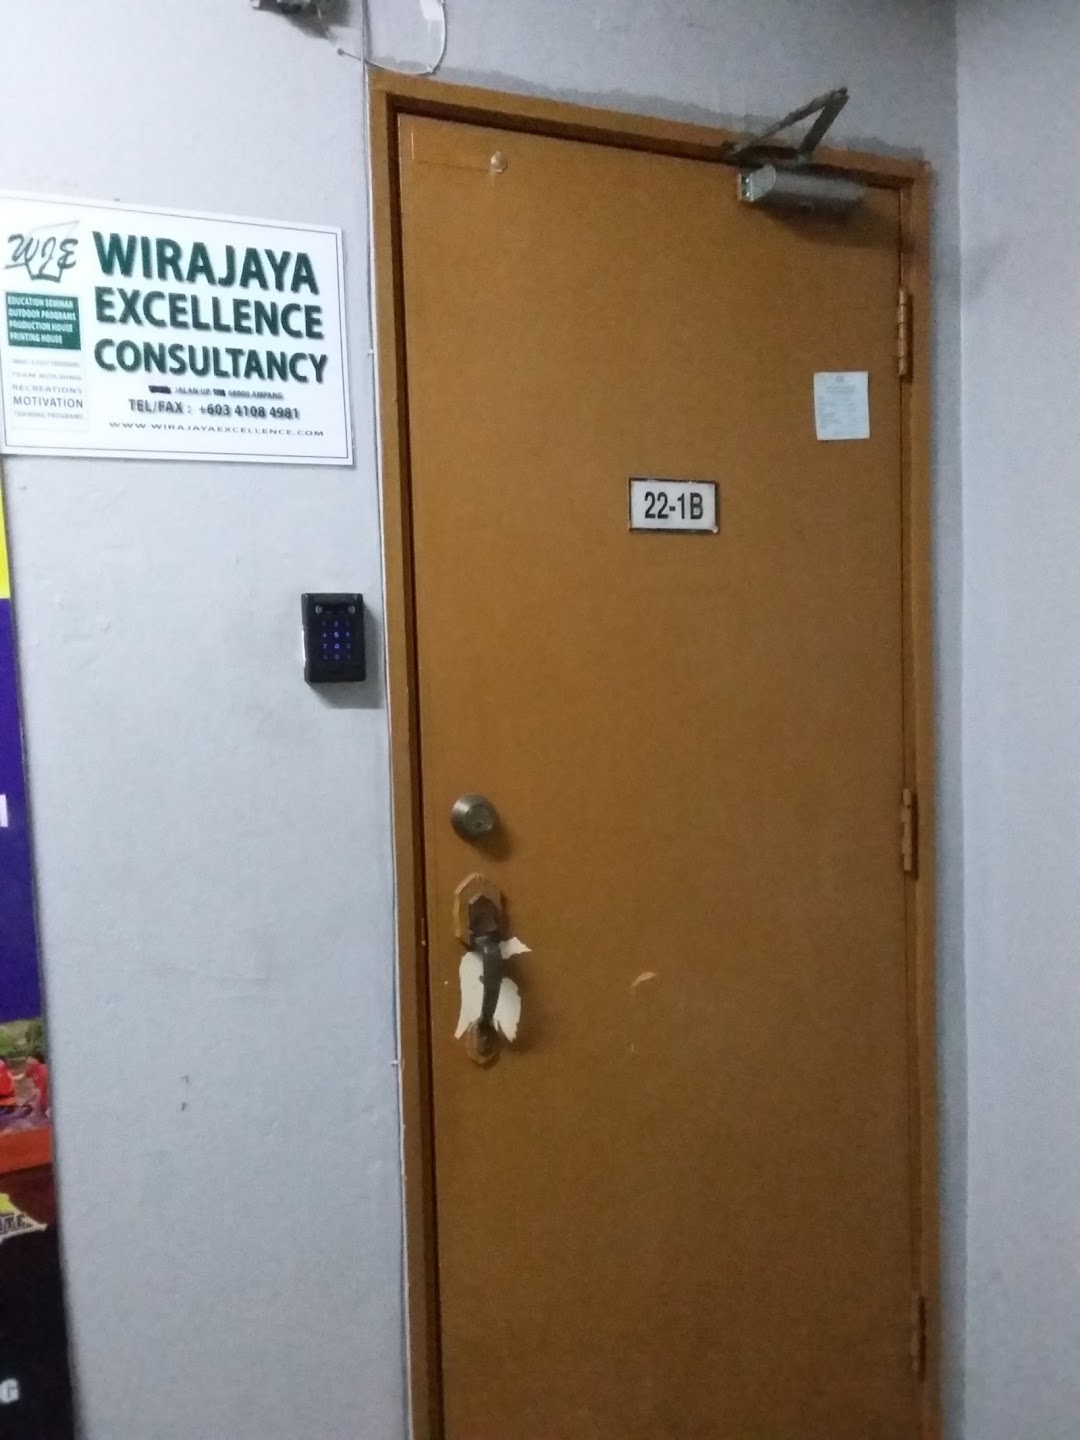 Wirajaya Excellence Consultancy